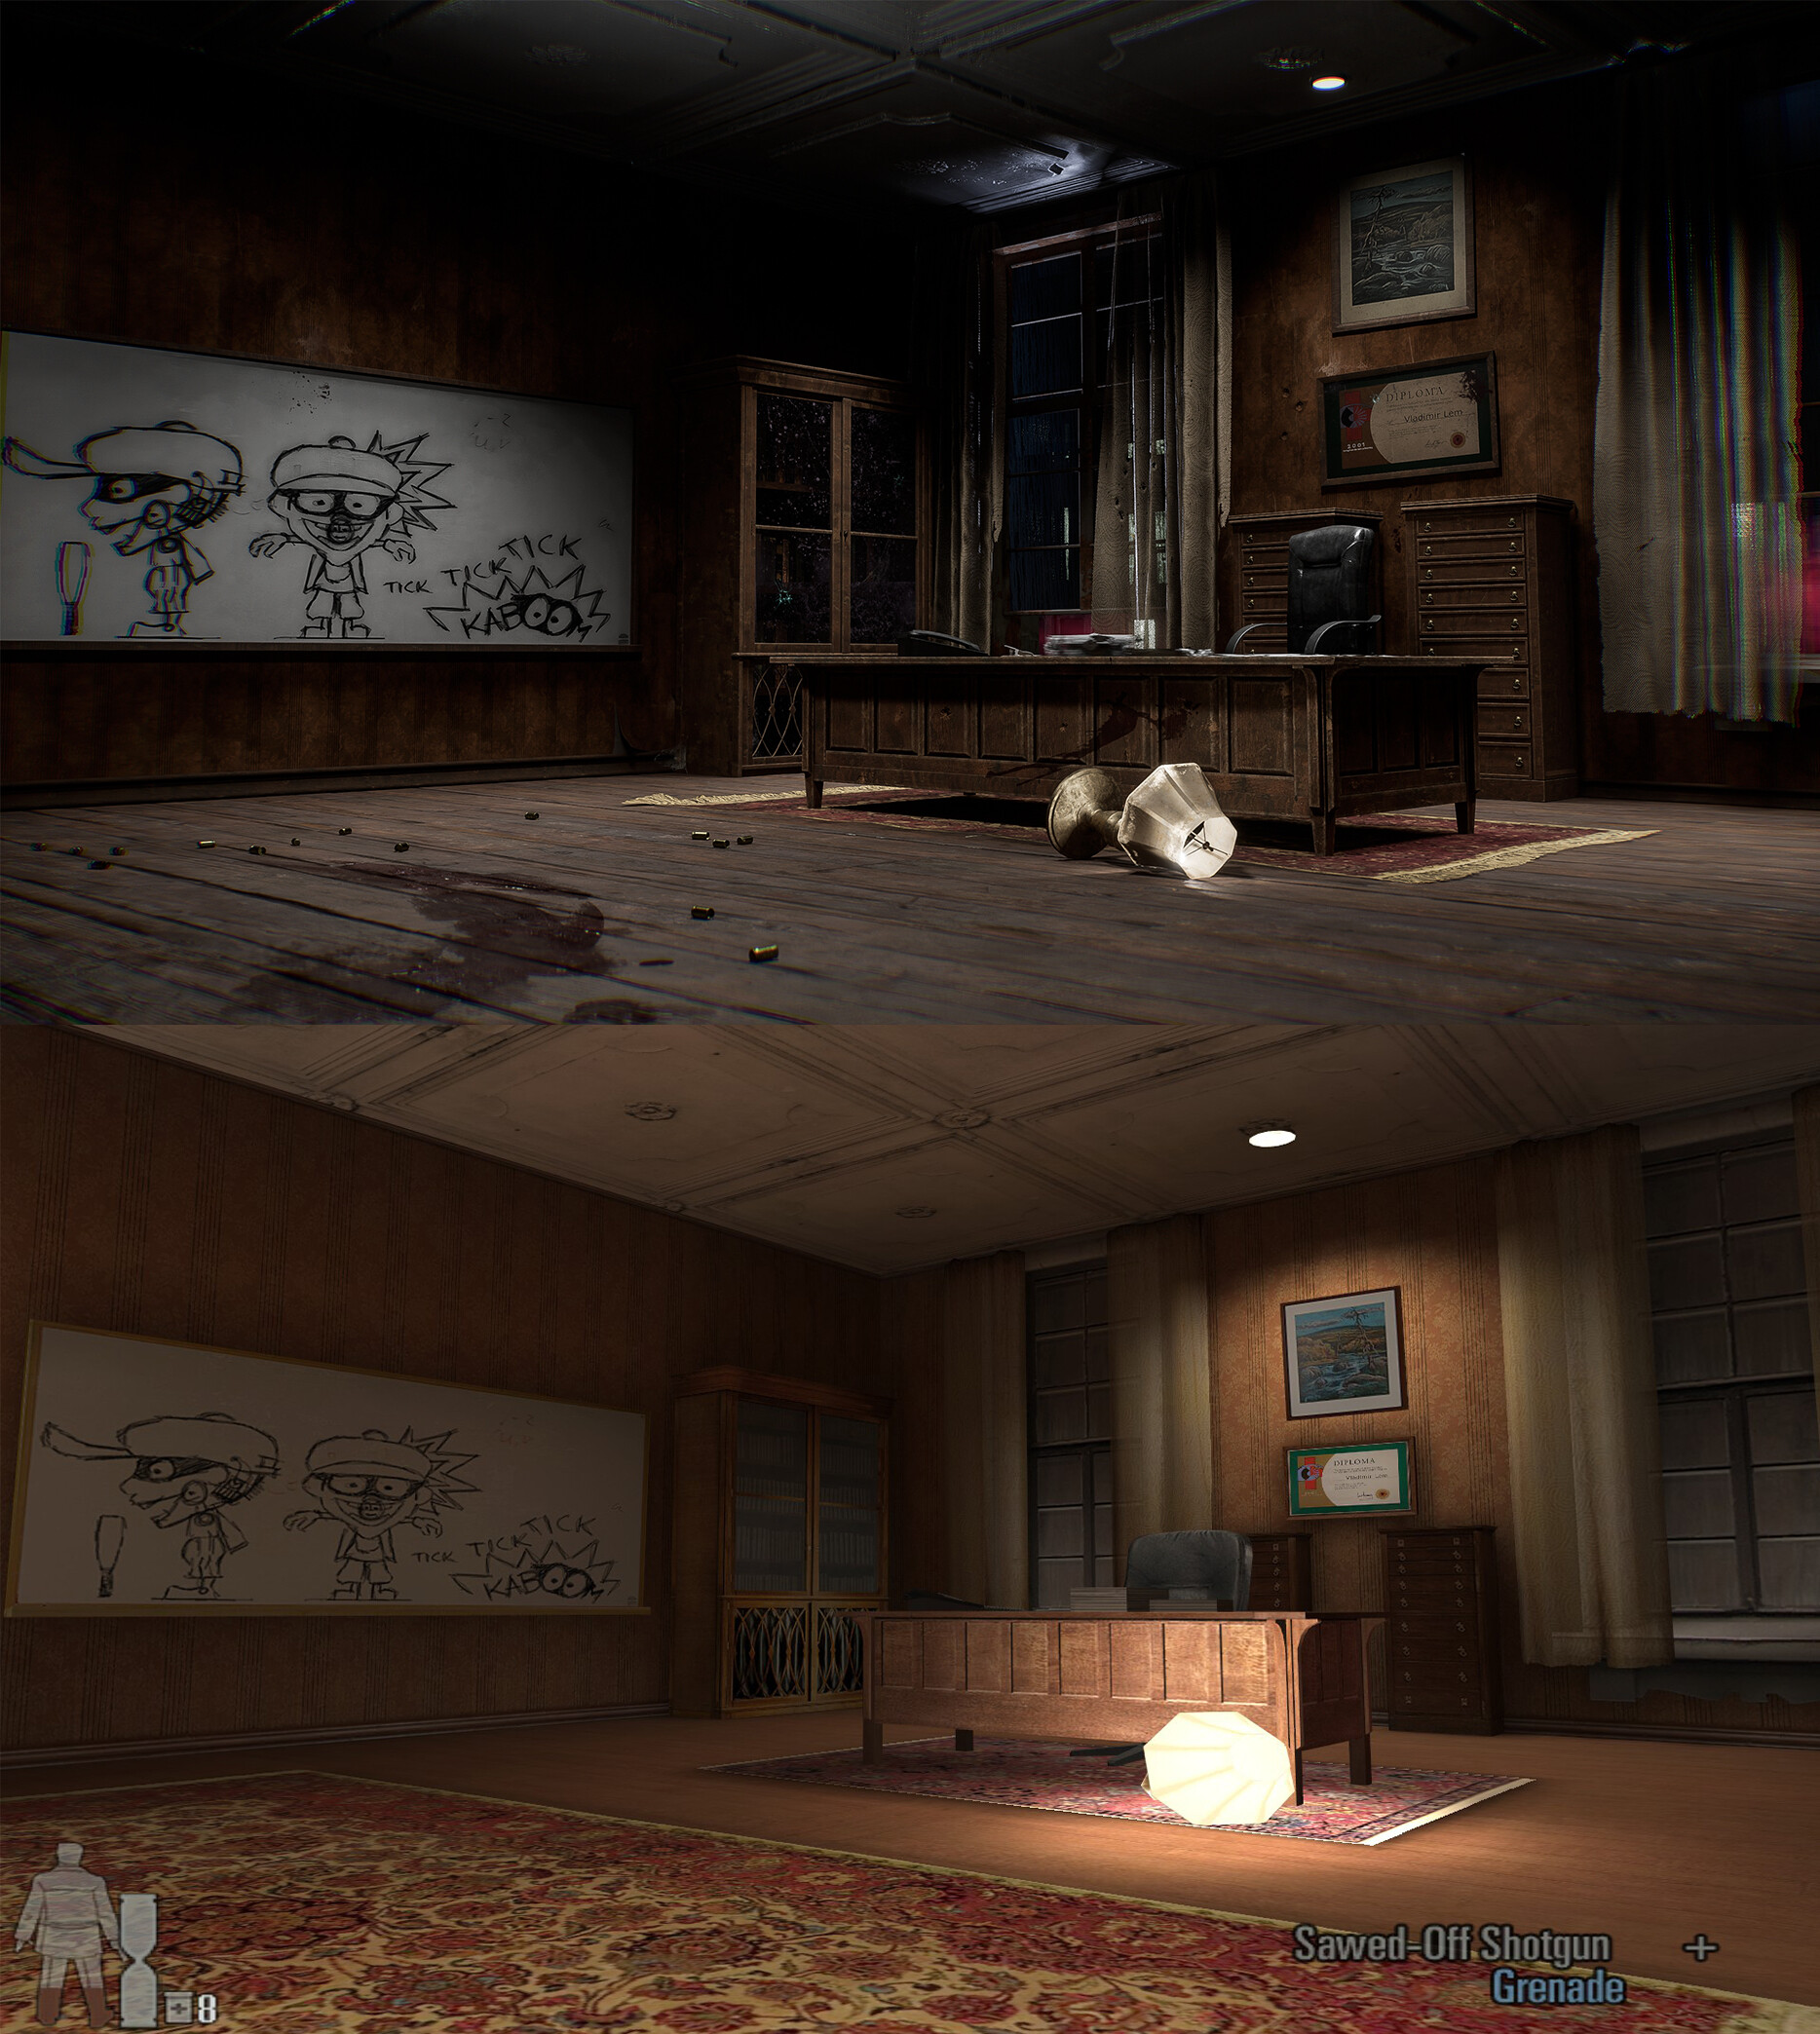 Max Payne 2 Remake - Unreal Engine 5 Showcase